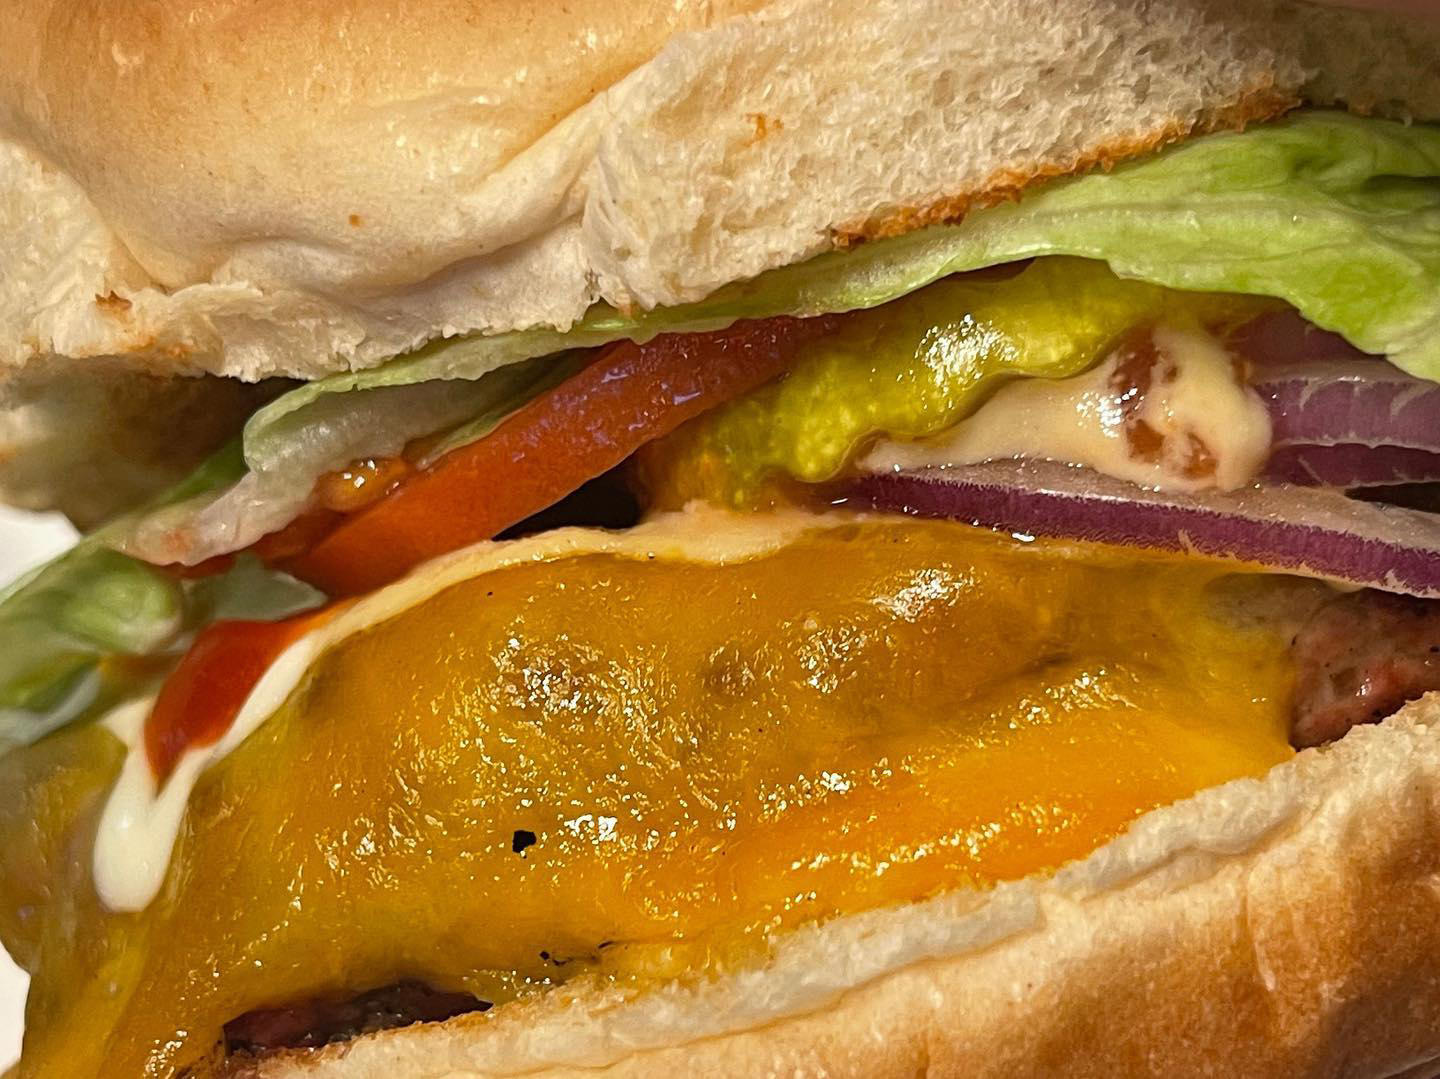 burger joint - Up close and personal •••#burgerjointnyc #burger #nyceats